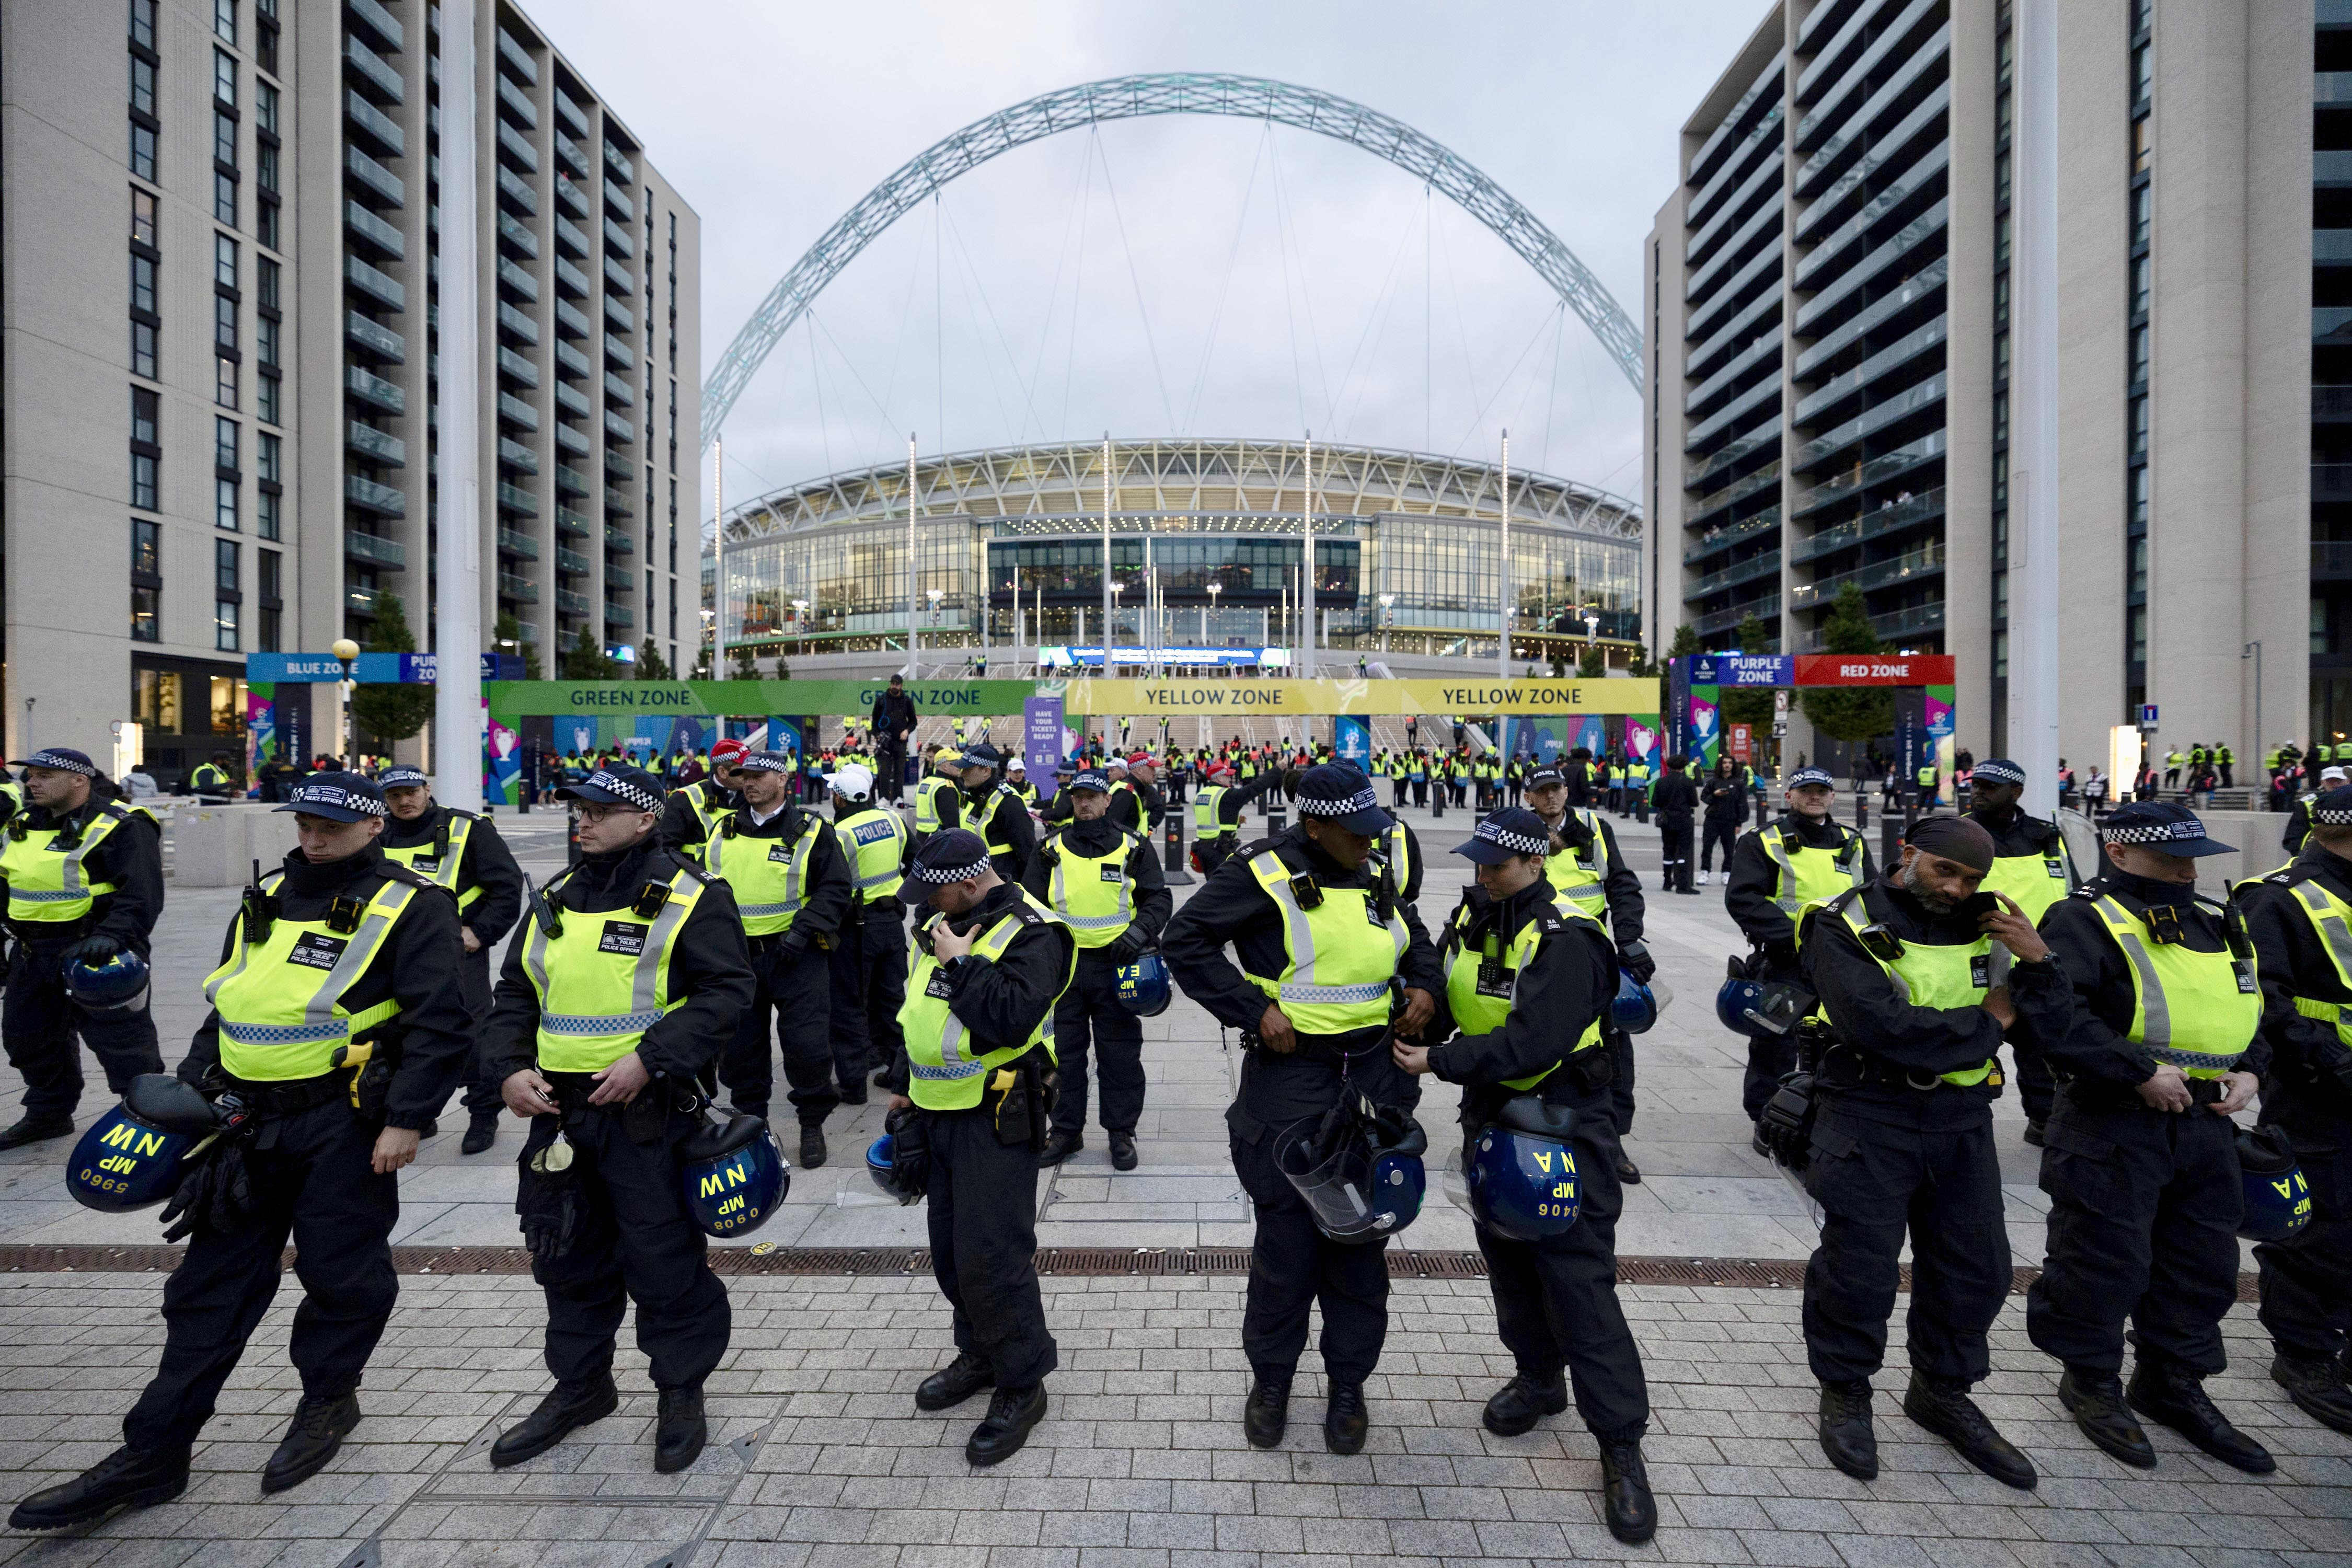 Cops were out in force at Wembley qhiqquiqddiedinv